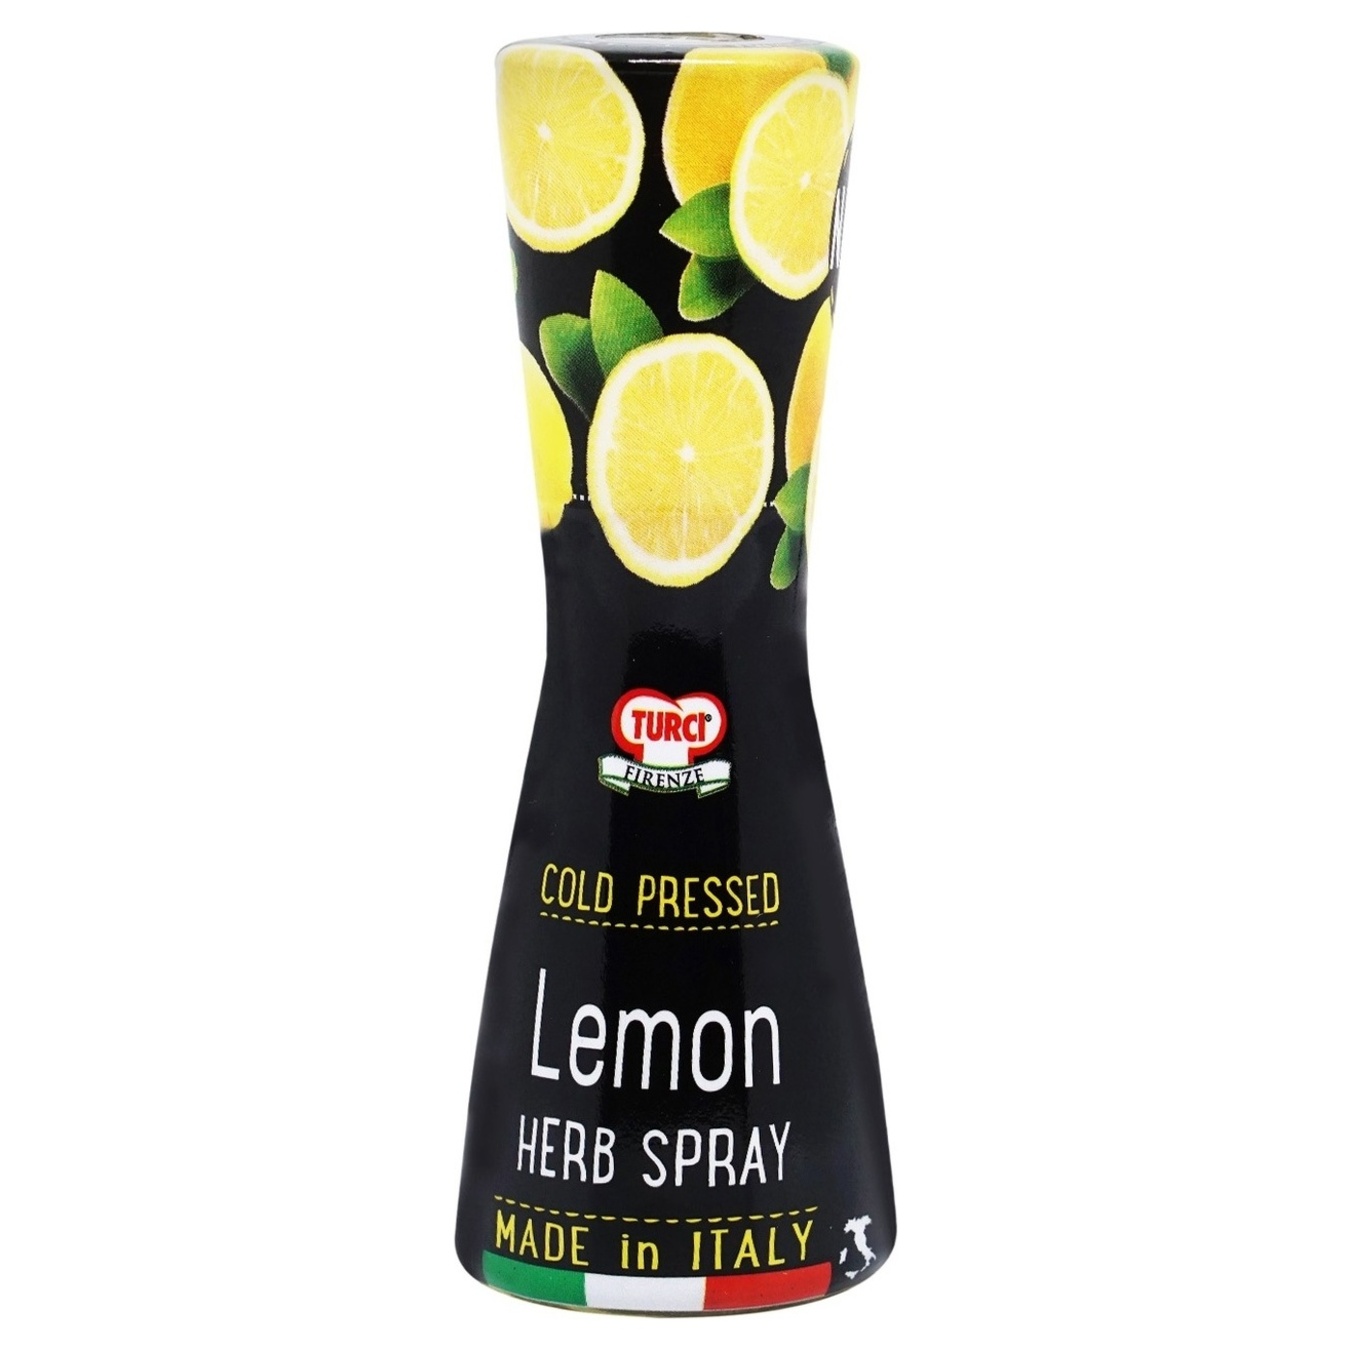 Seasoning Turci natural lemon extract in sunflower oil 40 ml